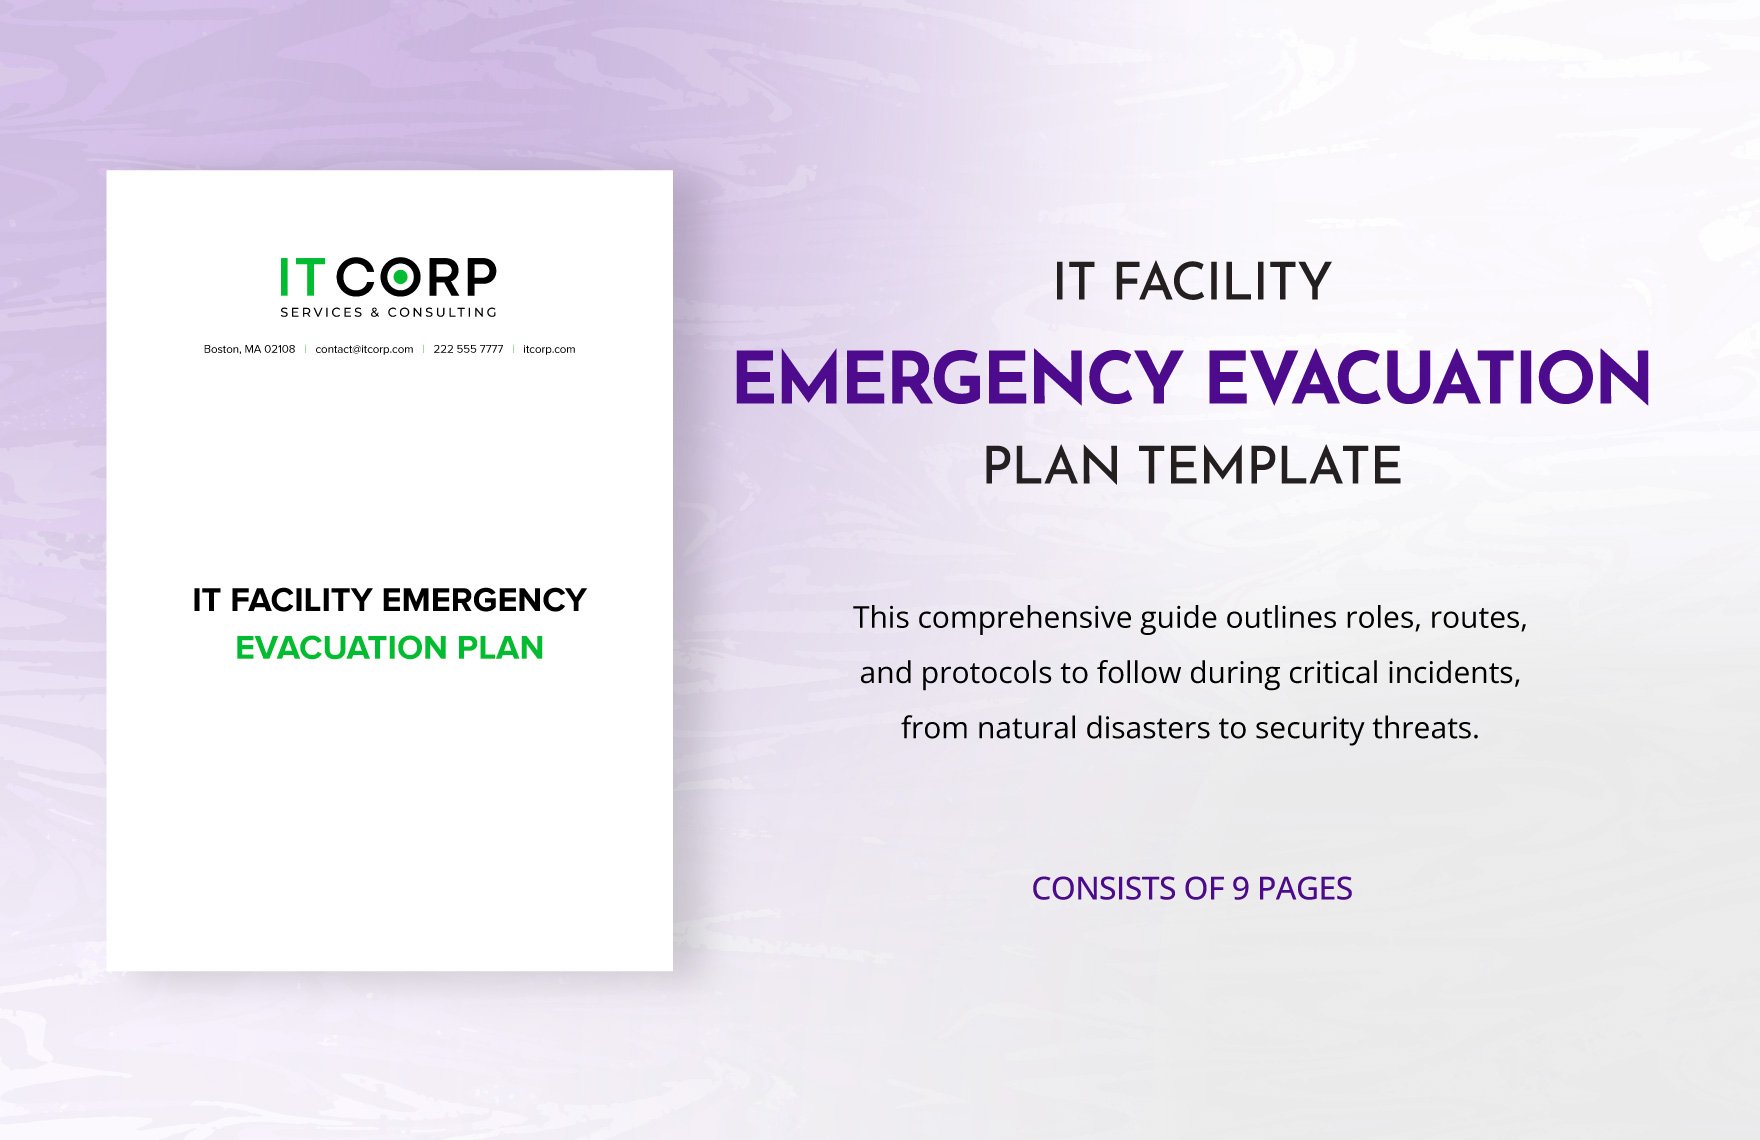 IT Facility Emergency Evacuation Plan Template